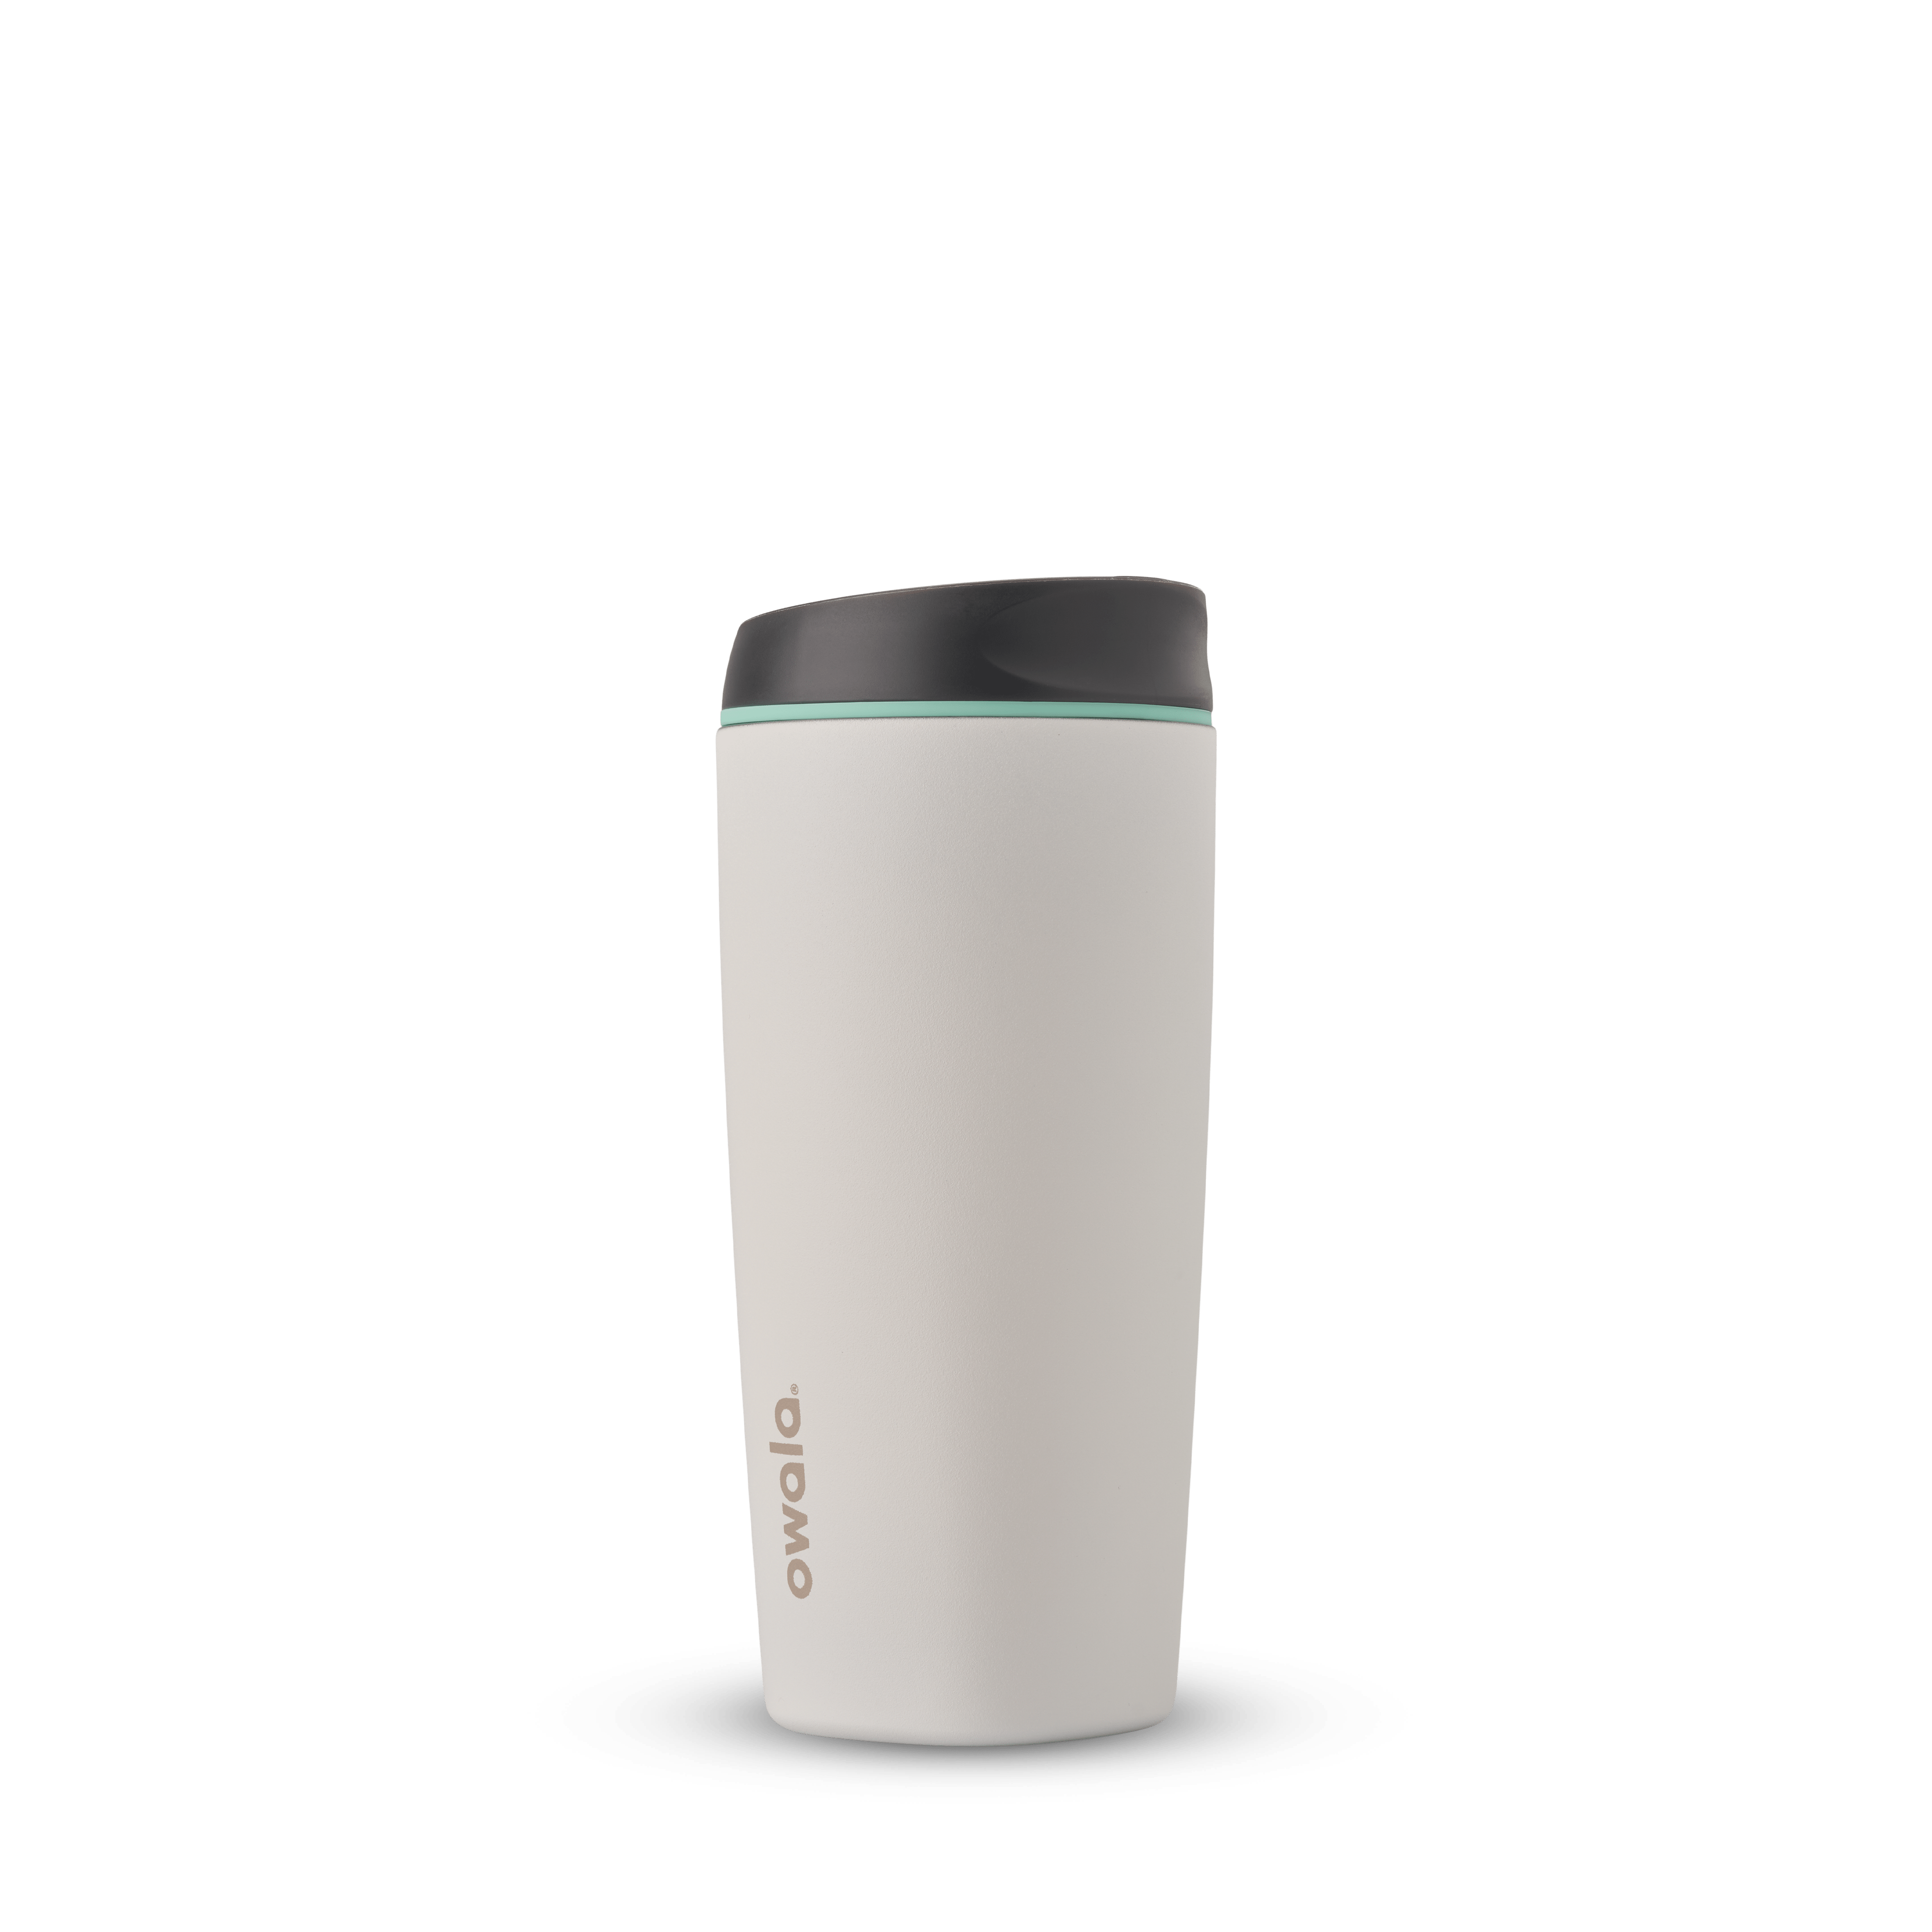 Owala SmoothSip Coffee Tumbler 20oz Review (2 Weeks of Use) 